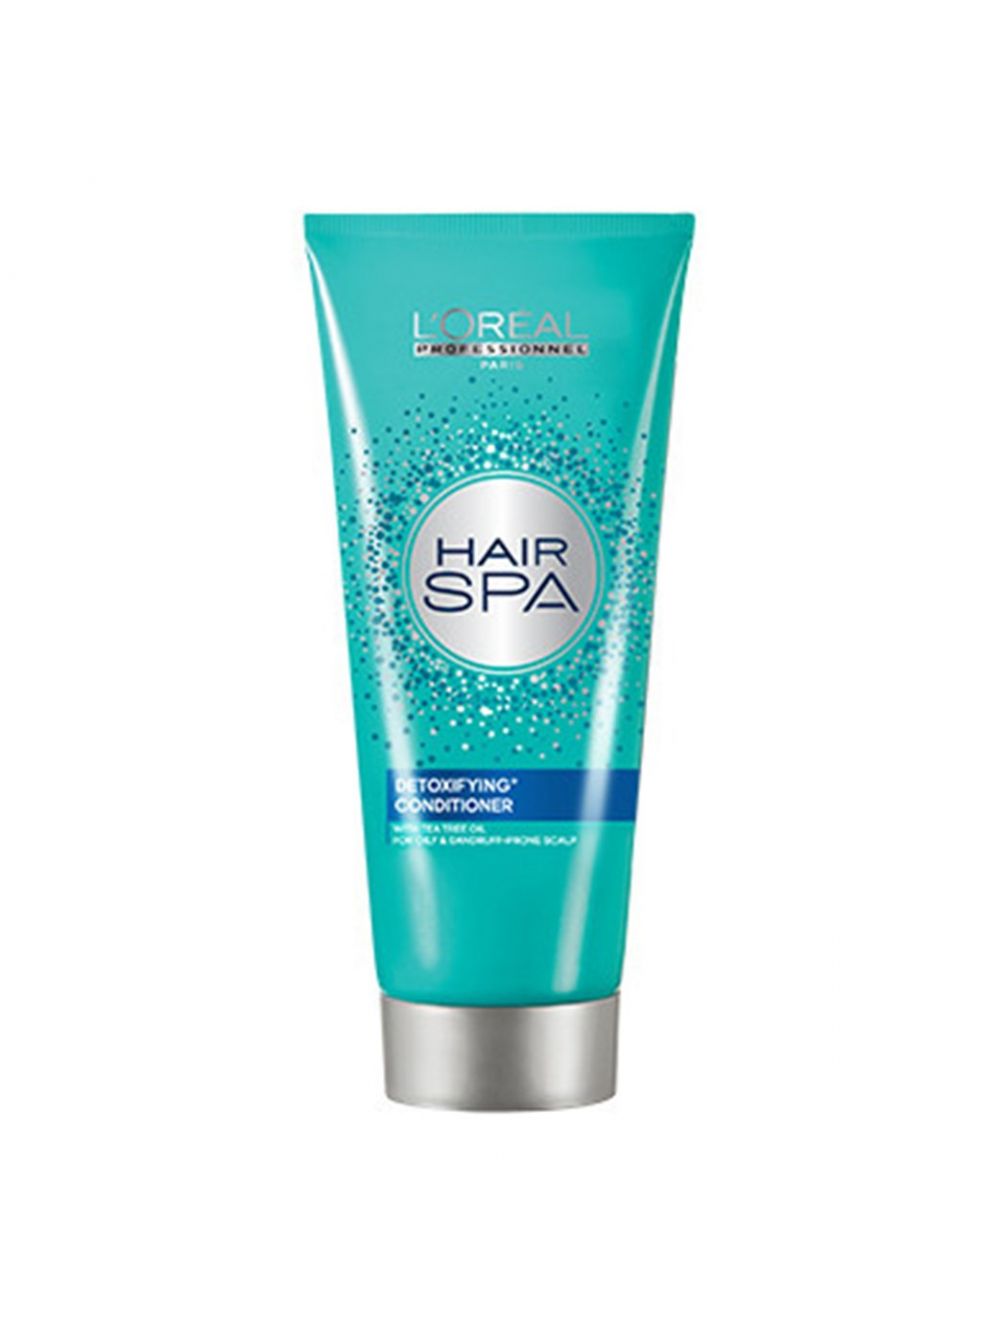 L'Oreal Professionnel Hair Spa Detoxifying Conditioner (200ml)